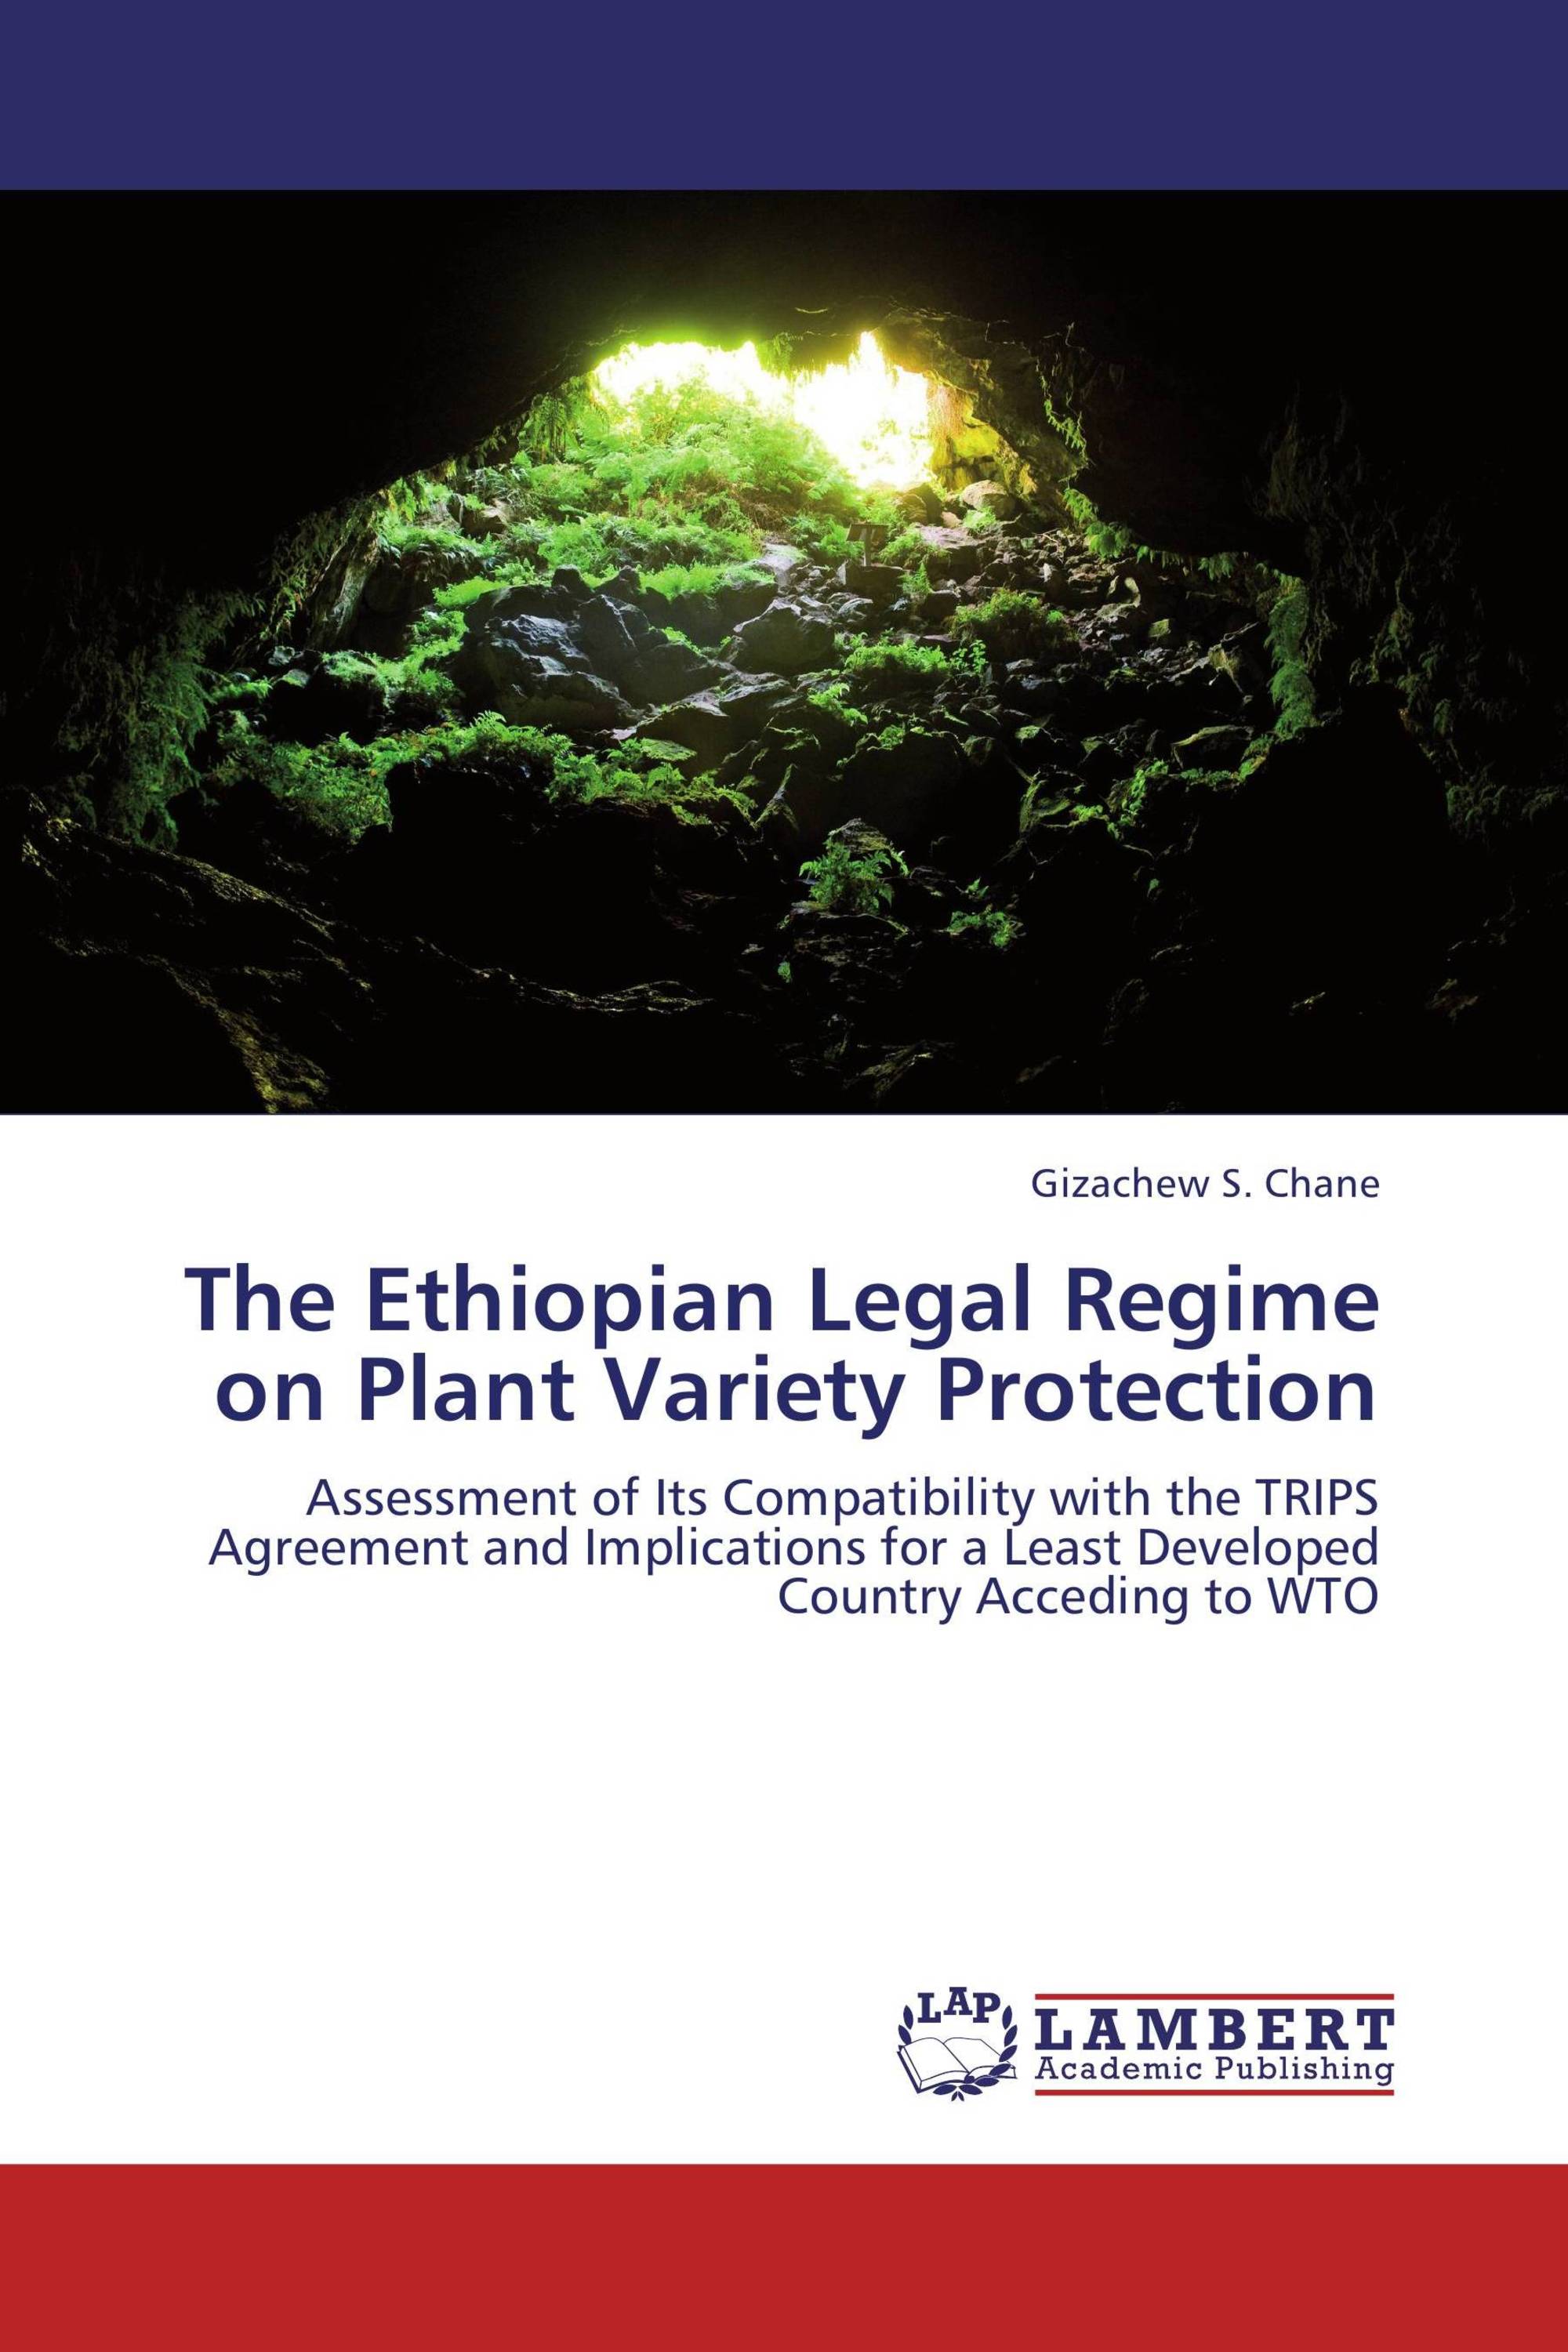 job vacancy in ethiopia in plant protection